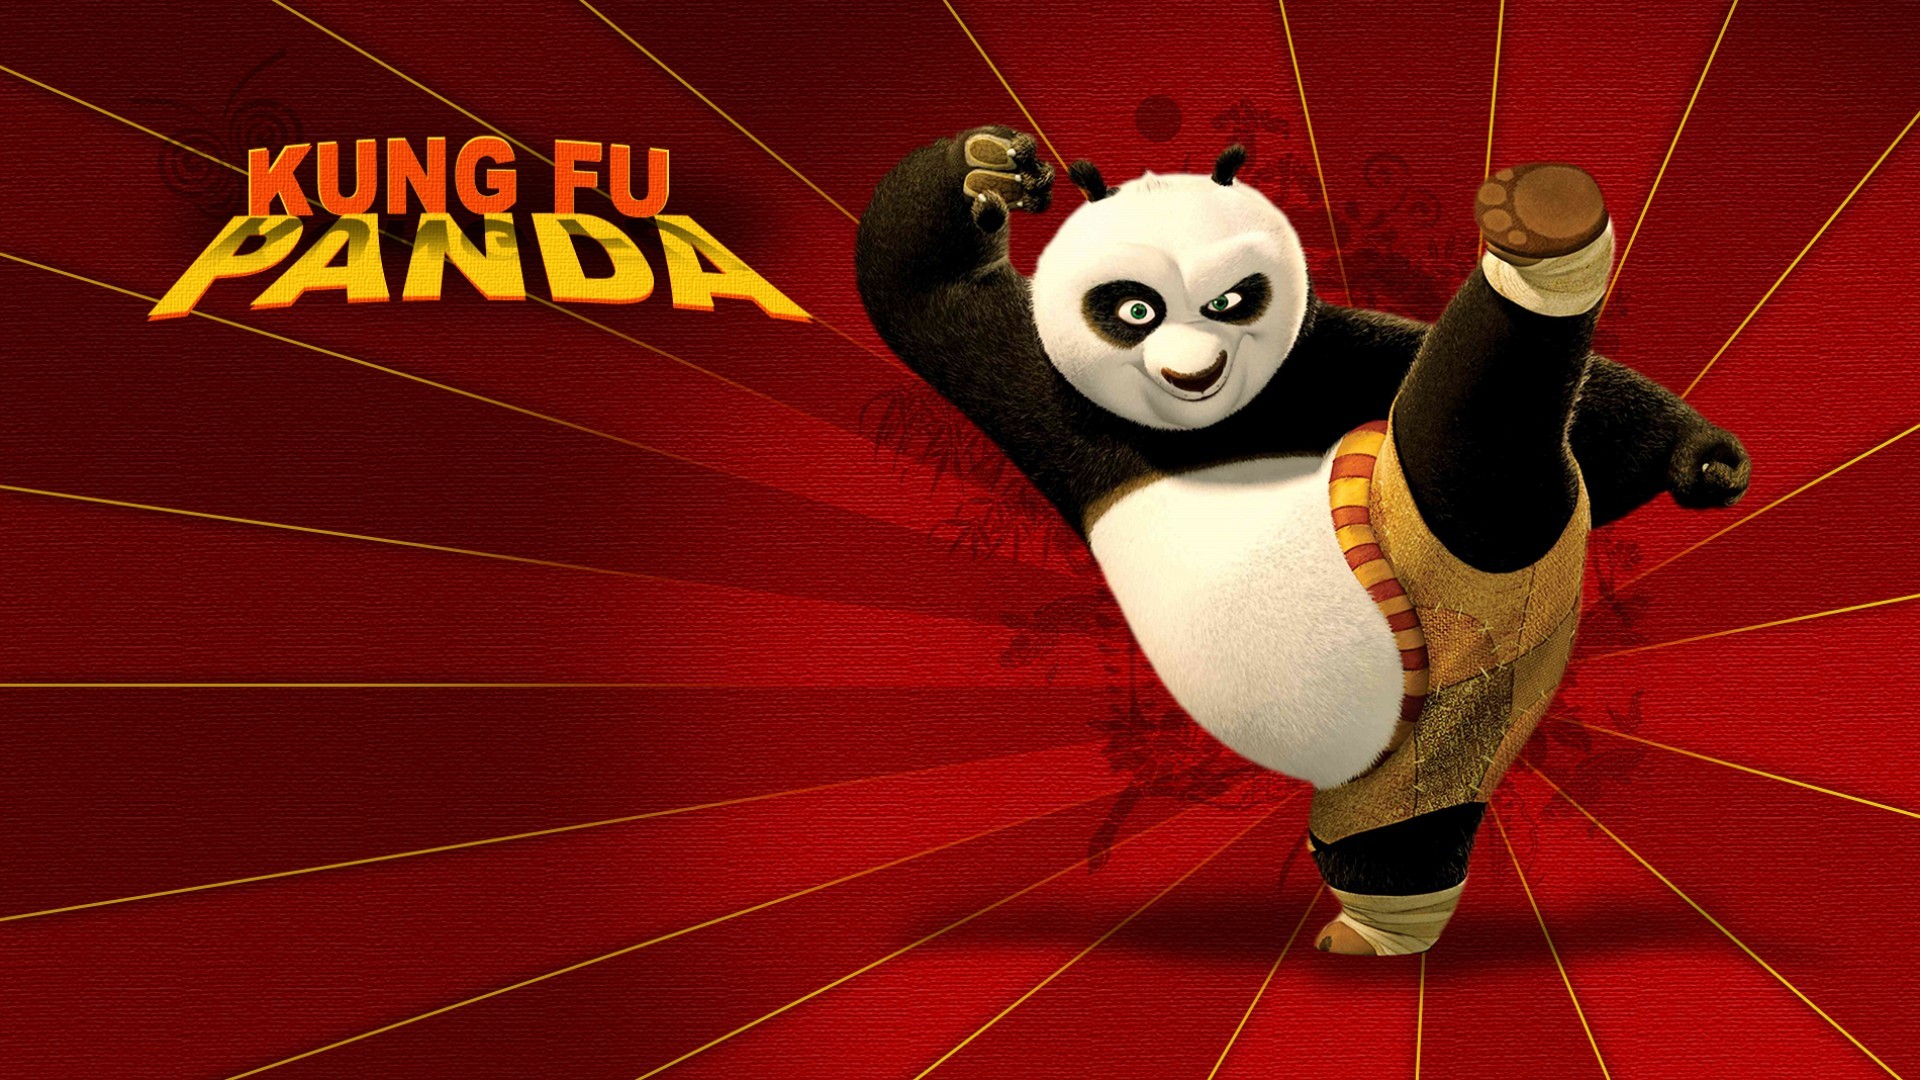 1920x1080 Kung Fu Panda wallpaper